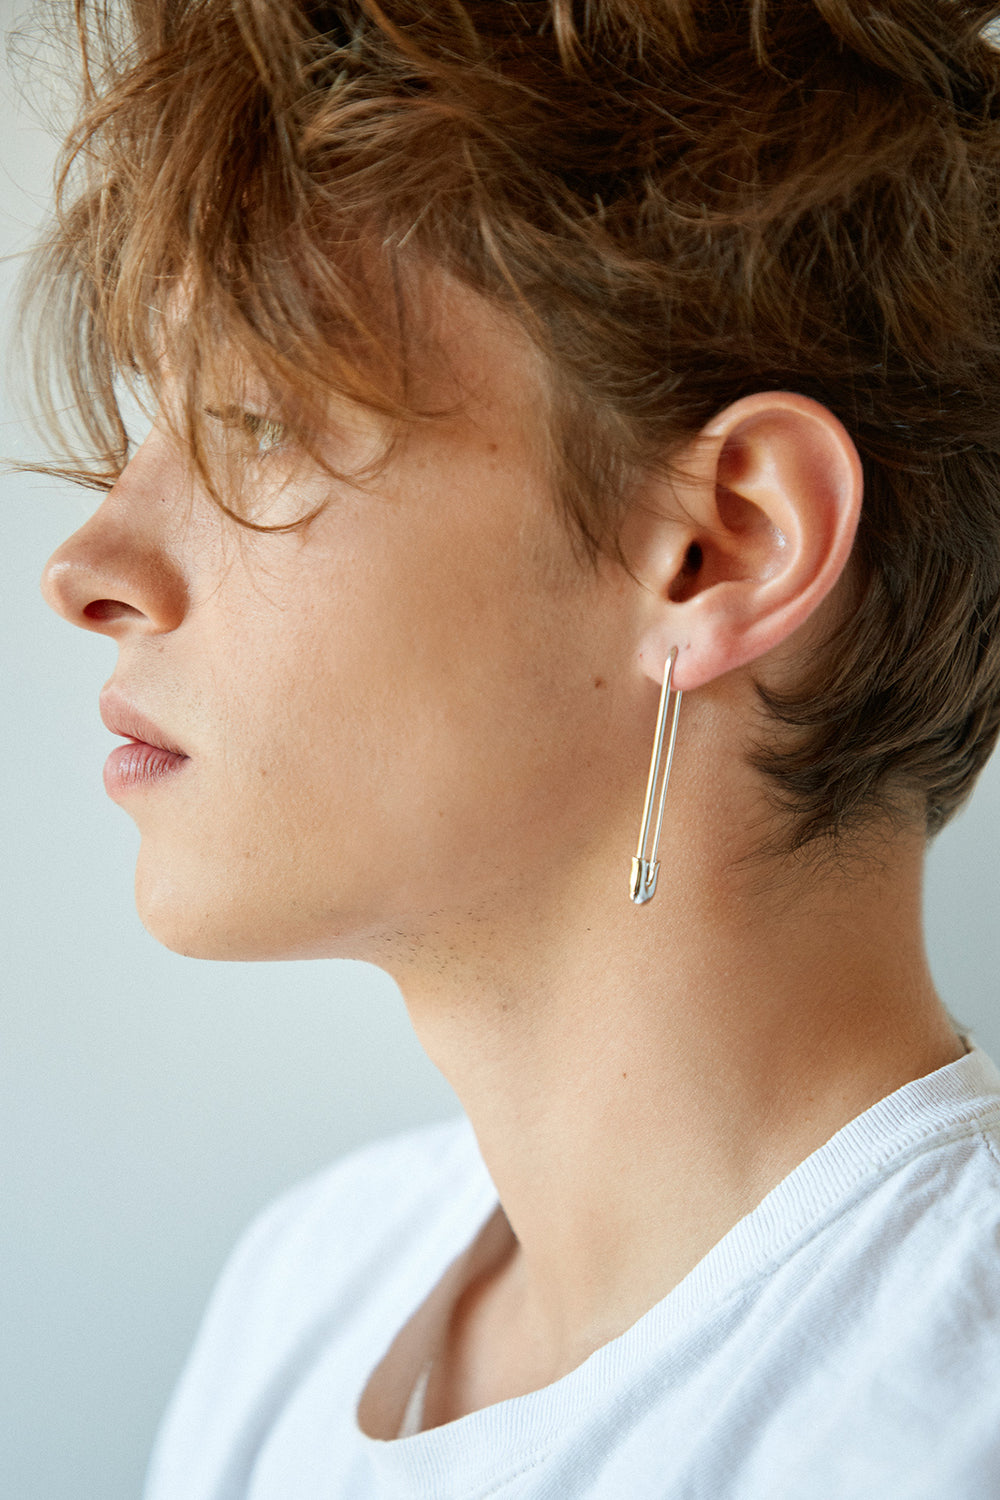 Of Arc Jewelry - Silver Pin Earring